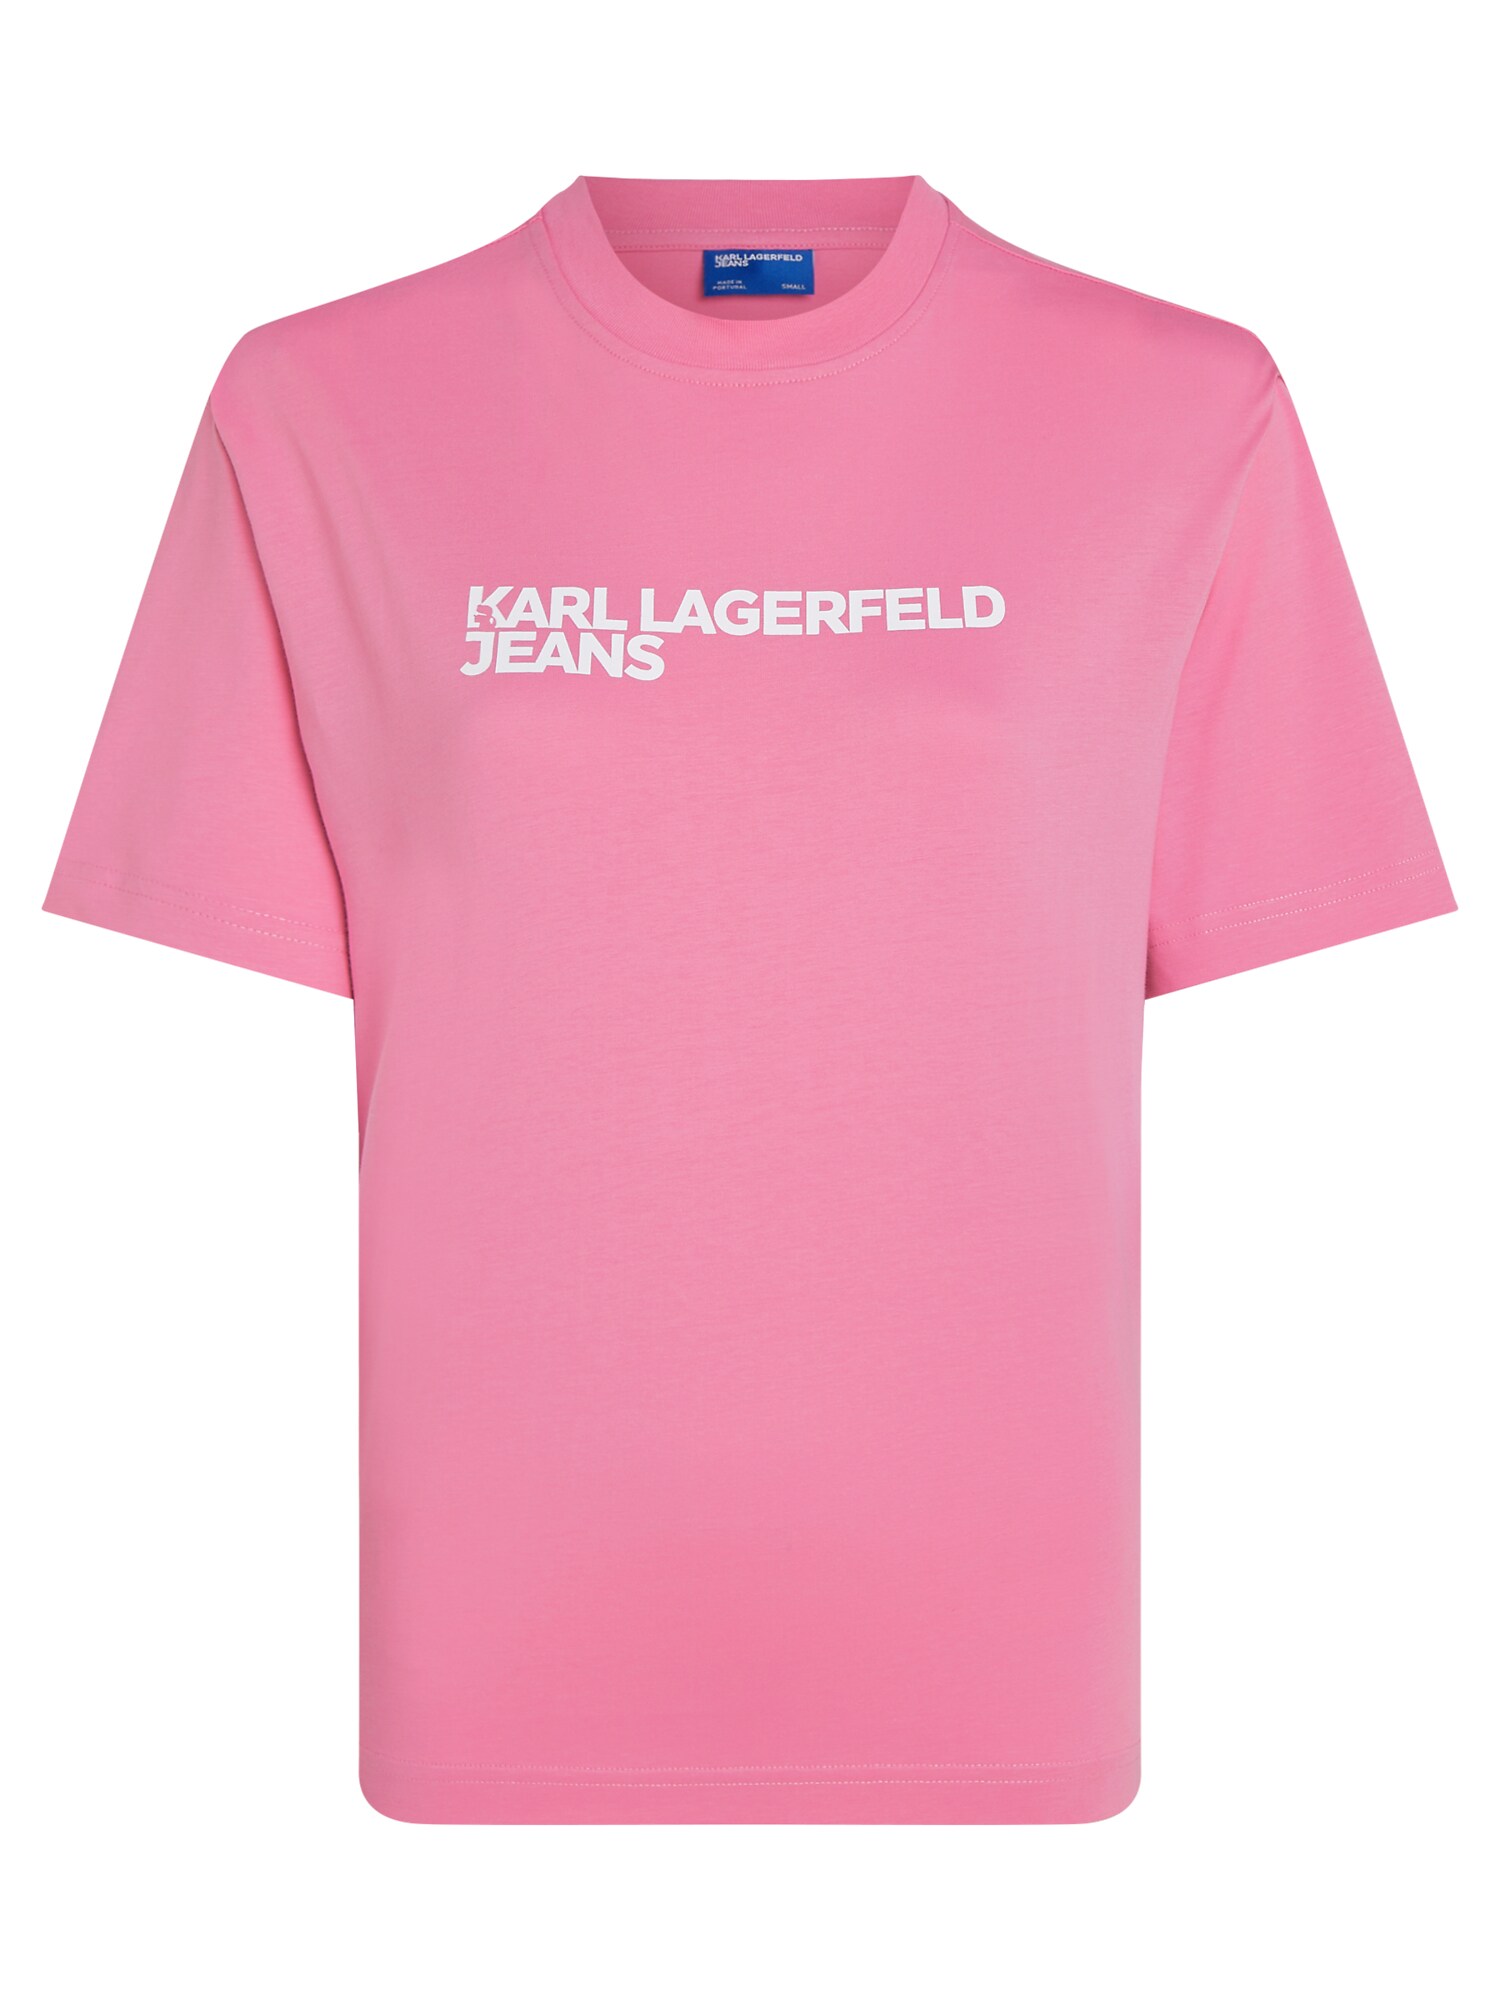 KARL LAGERFELD JEANS Tričko  ružová / biela